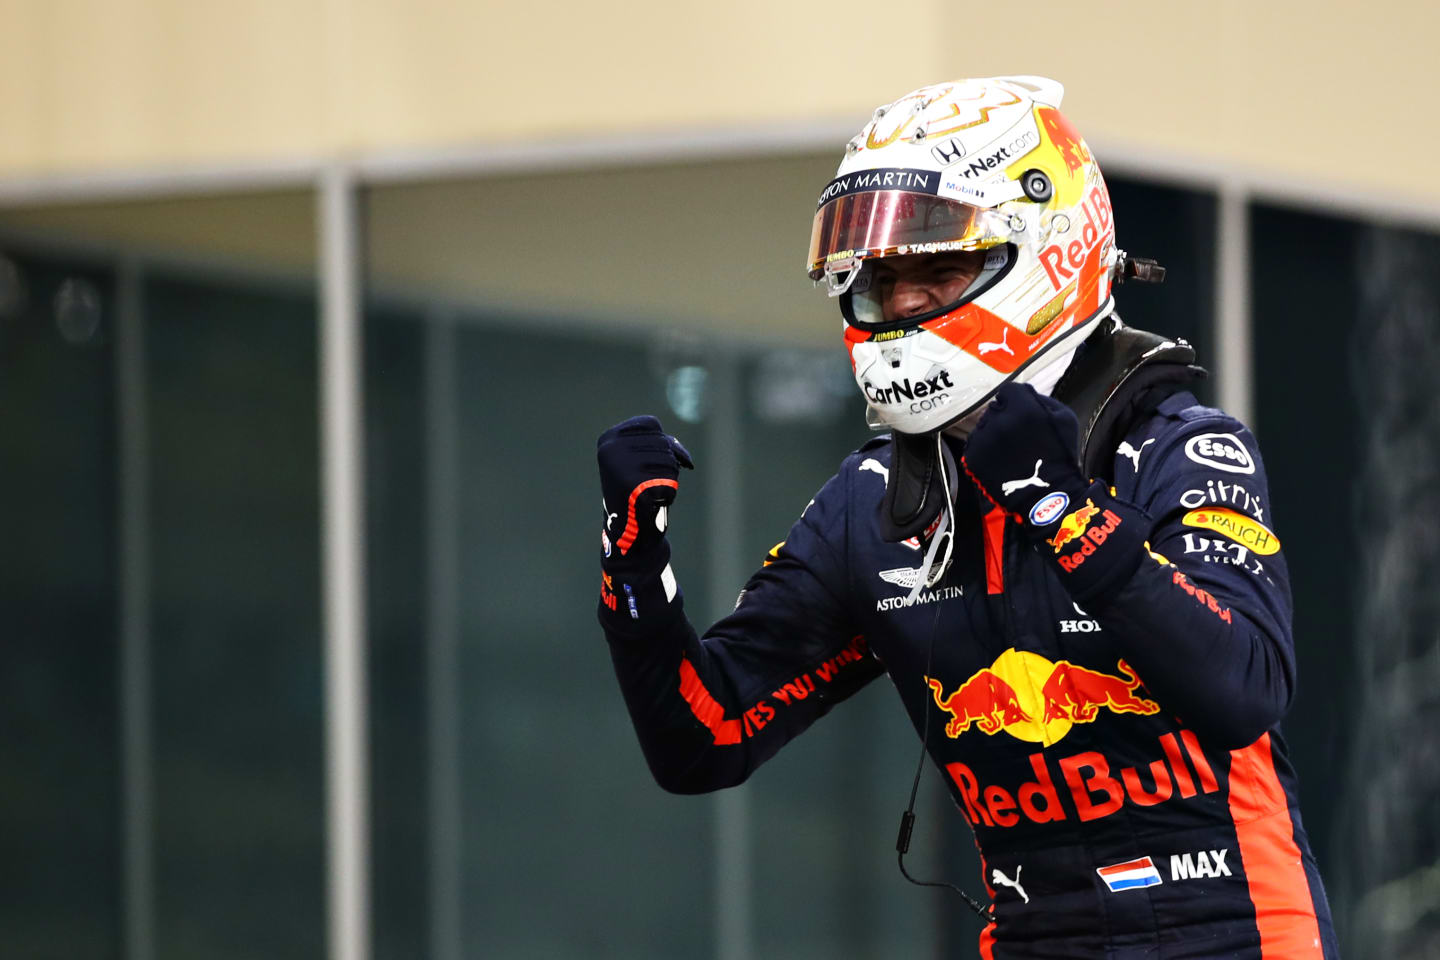 ABU DHABI, UNITED ARAB EMIRATES - DECEMBER 13: Race winner Max Verstappen of Netherlands and Red